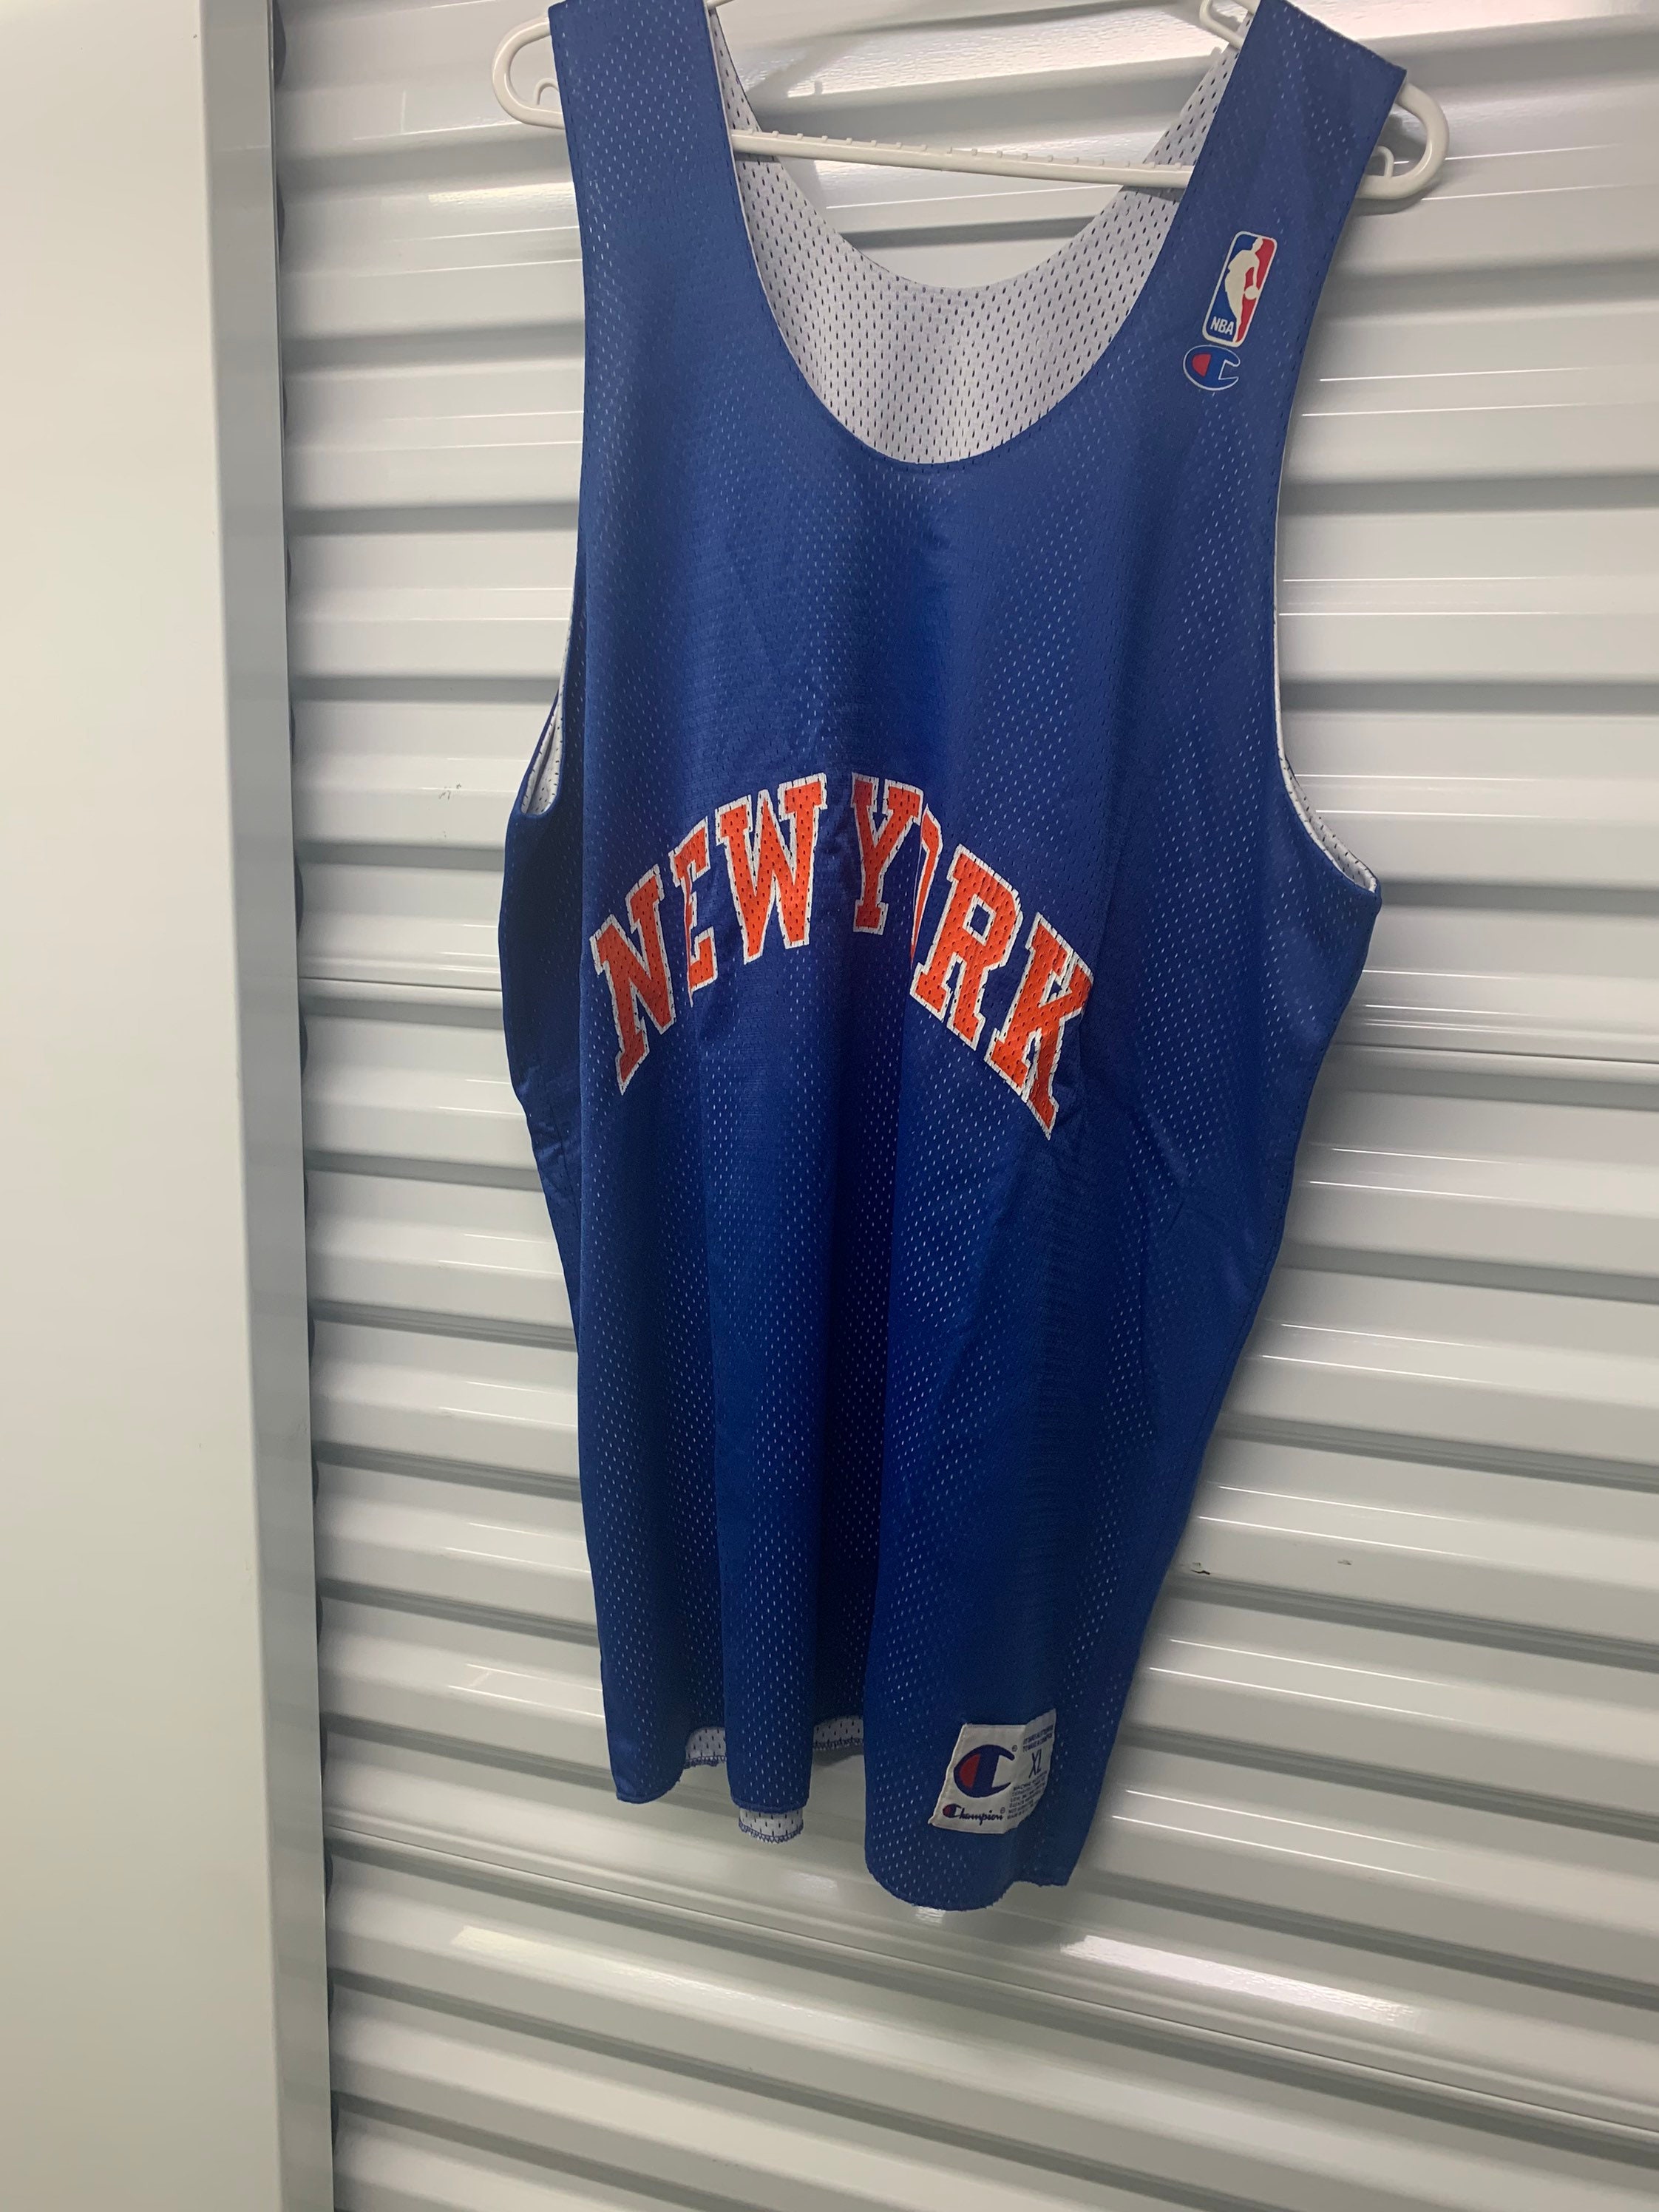 Nate Robinson Signed New York Knicks Custom NBA Style Jersey